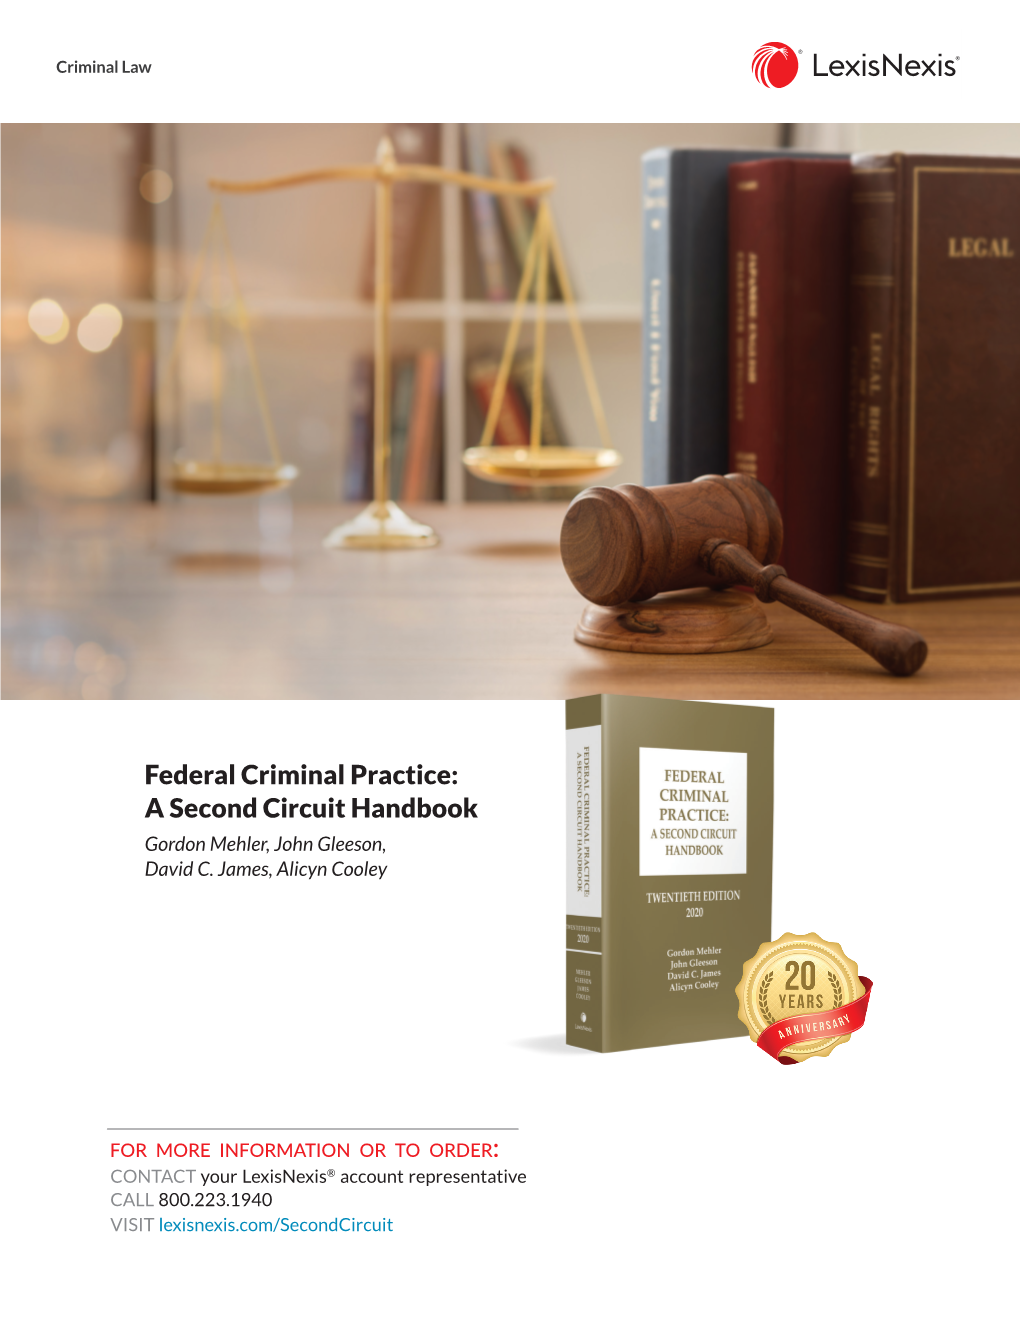 Federal Criminal Practice: a Second Circuit Handbook Gordon Mehler, John Gleeson, David C